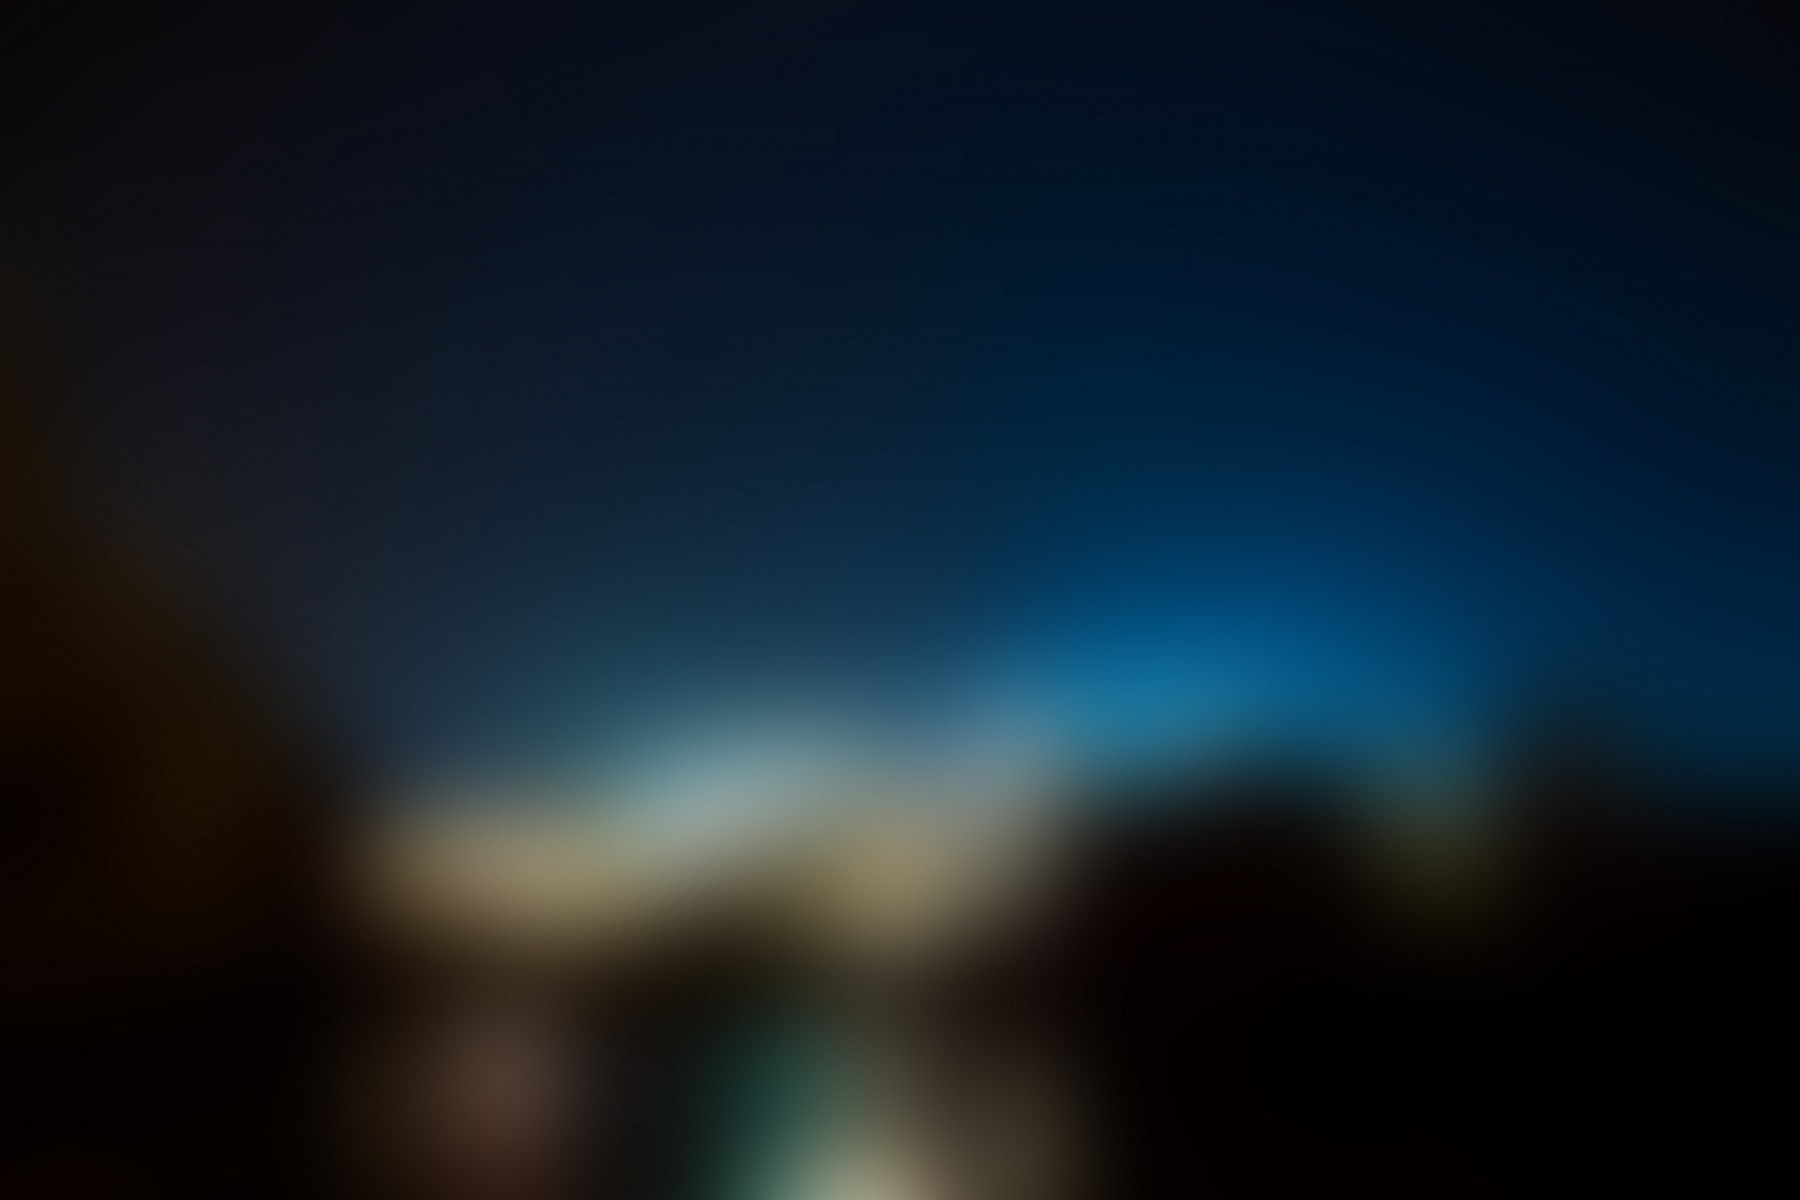 Blur Backgrounds Archives - SplitShire